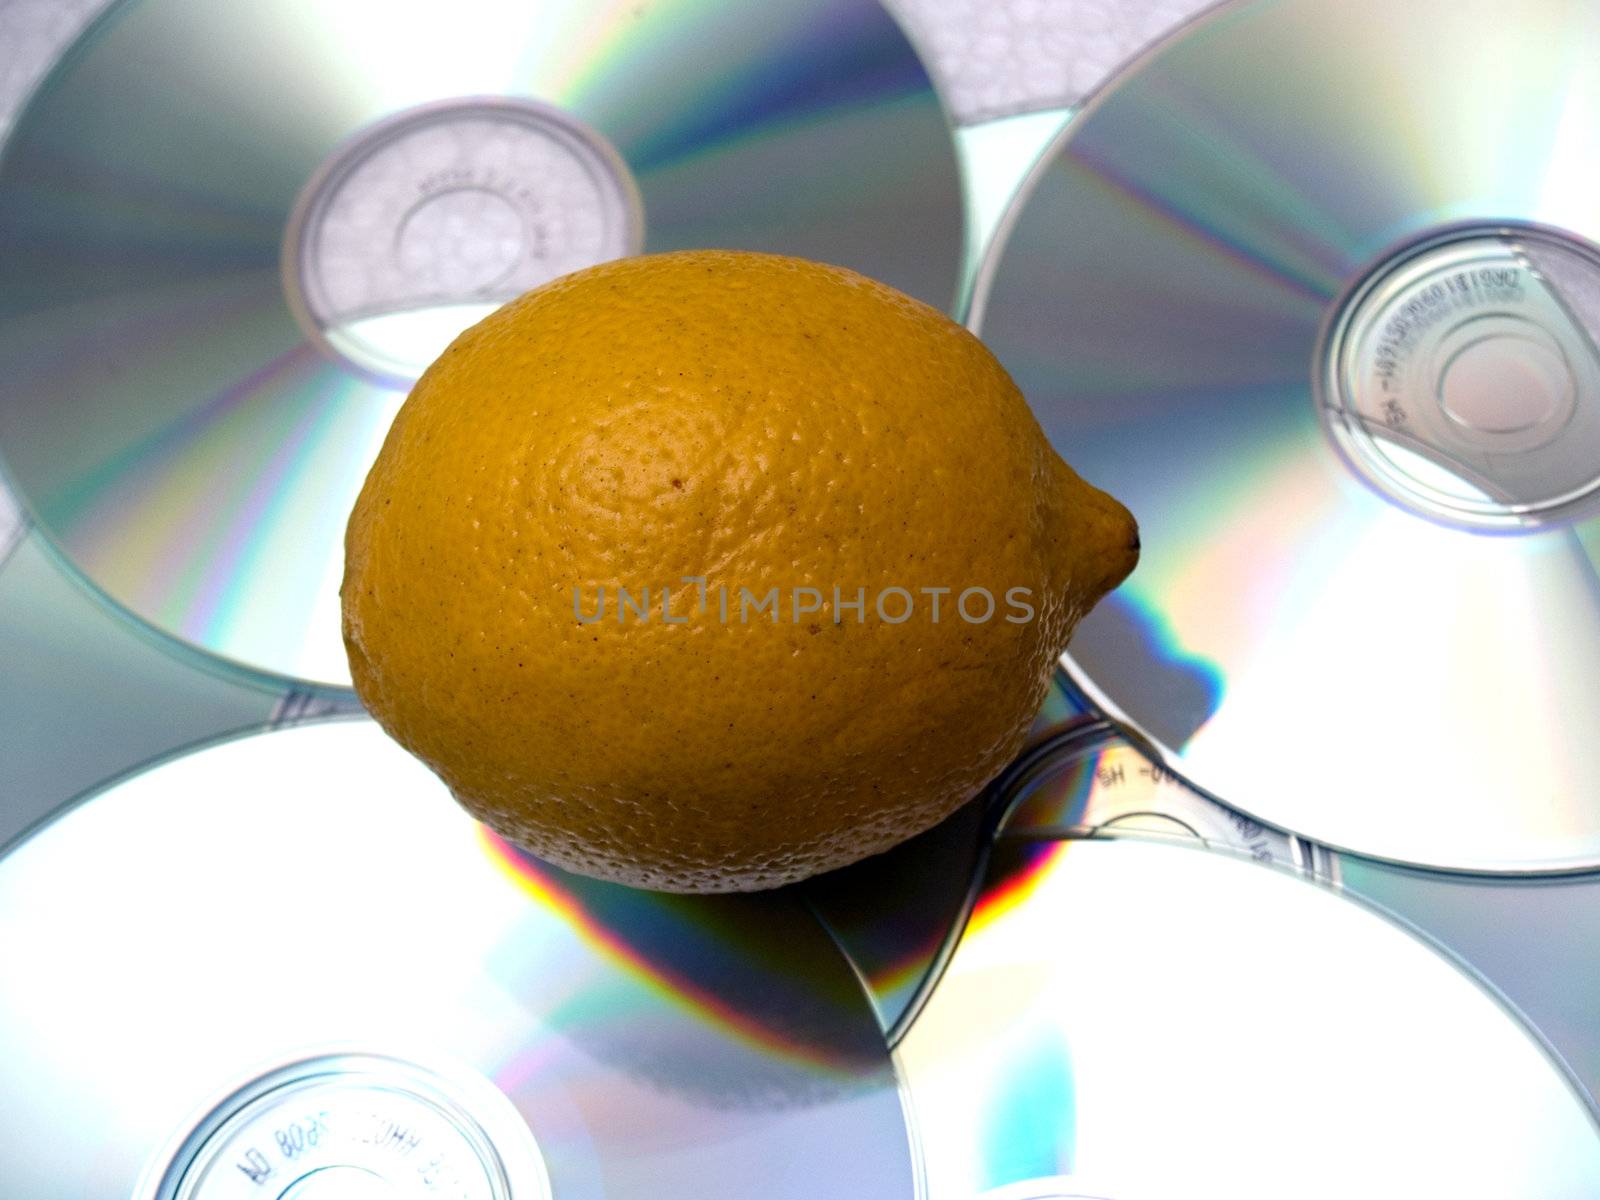 lemon and cds.